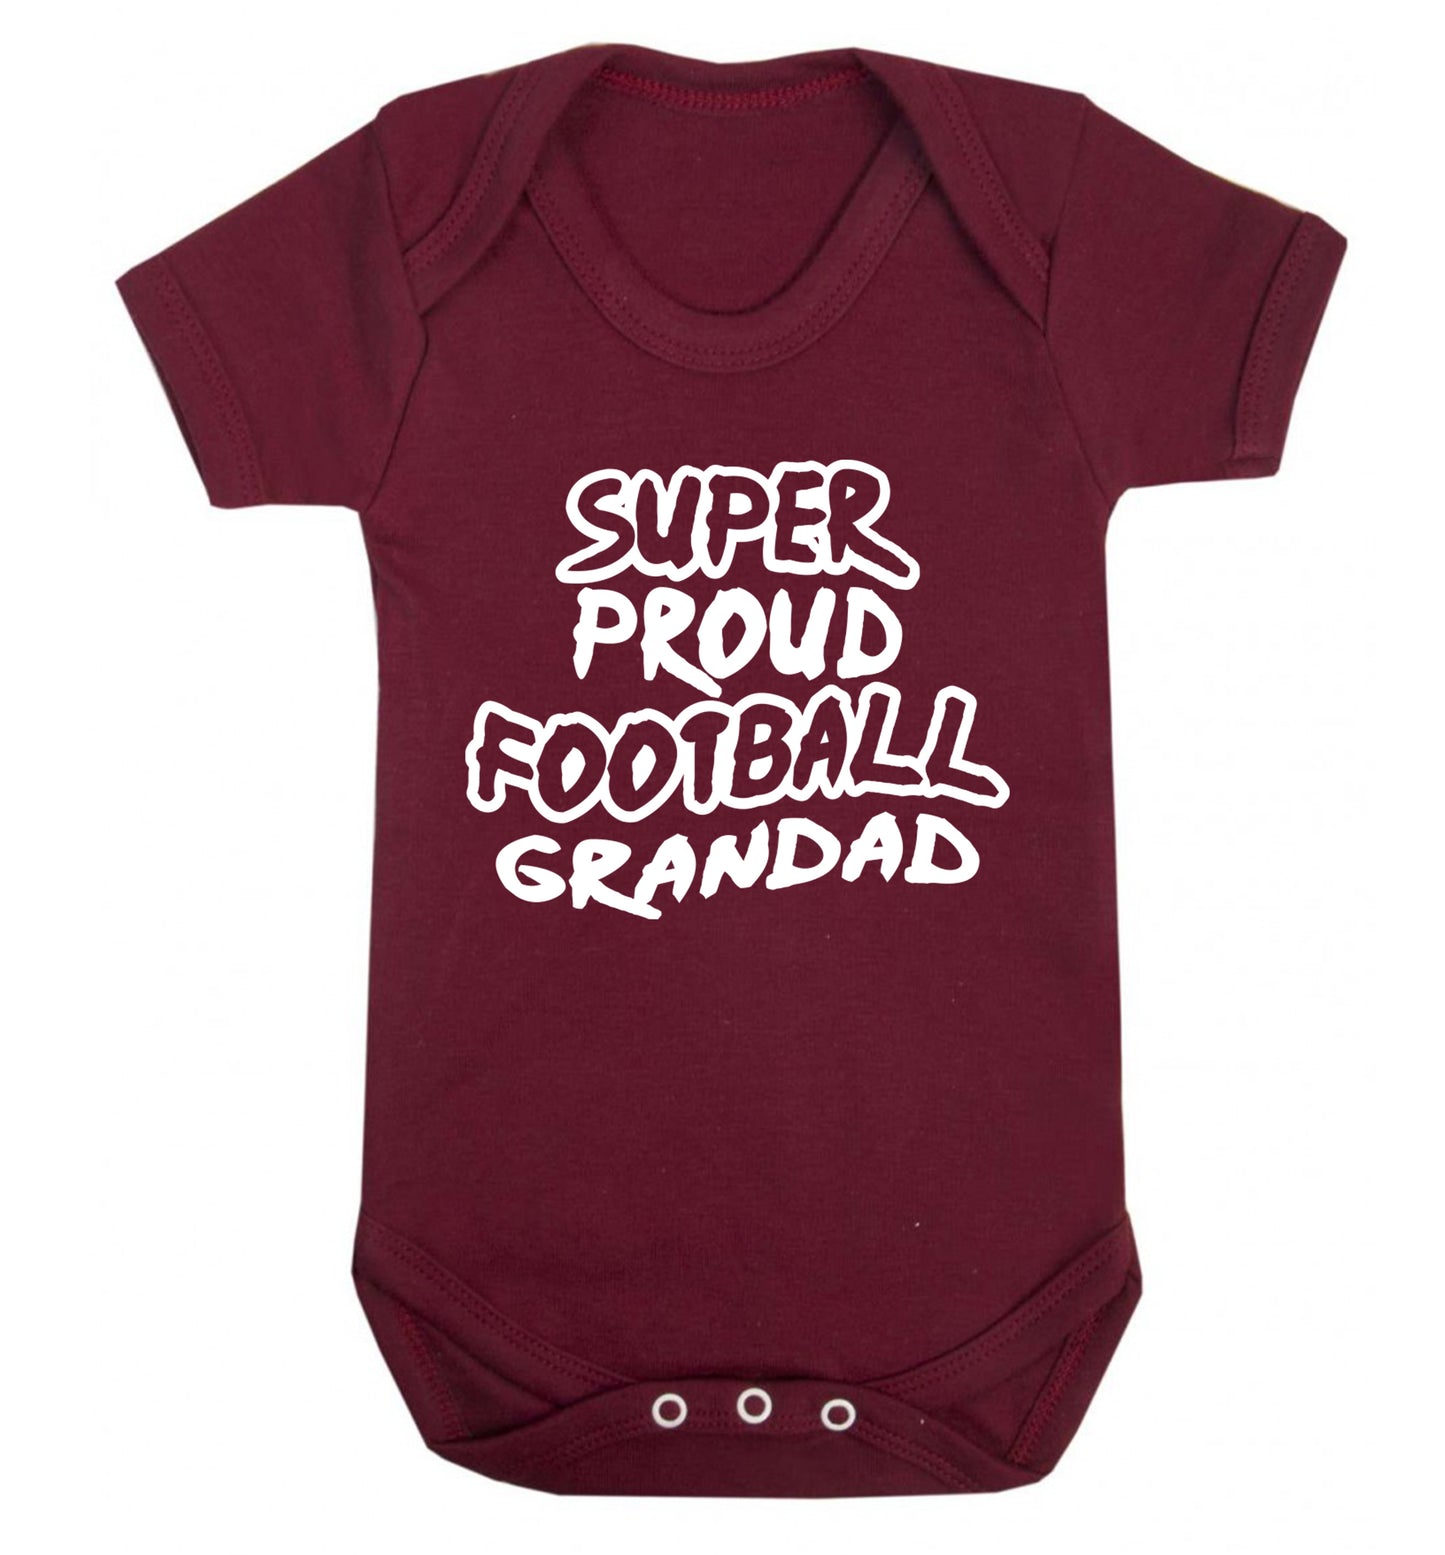 Super proud football grandad Baby Vest maroon 18-24 months